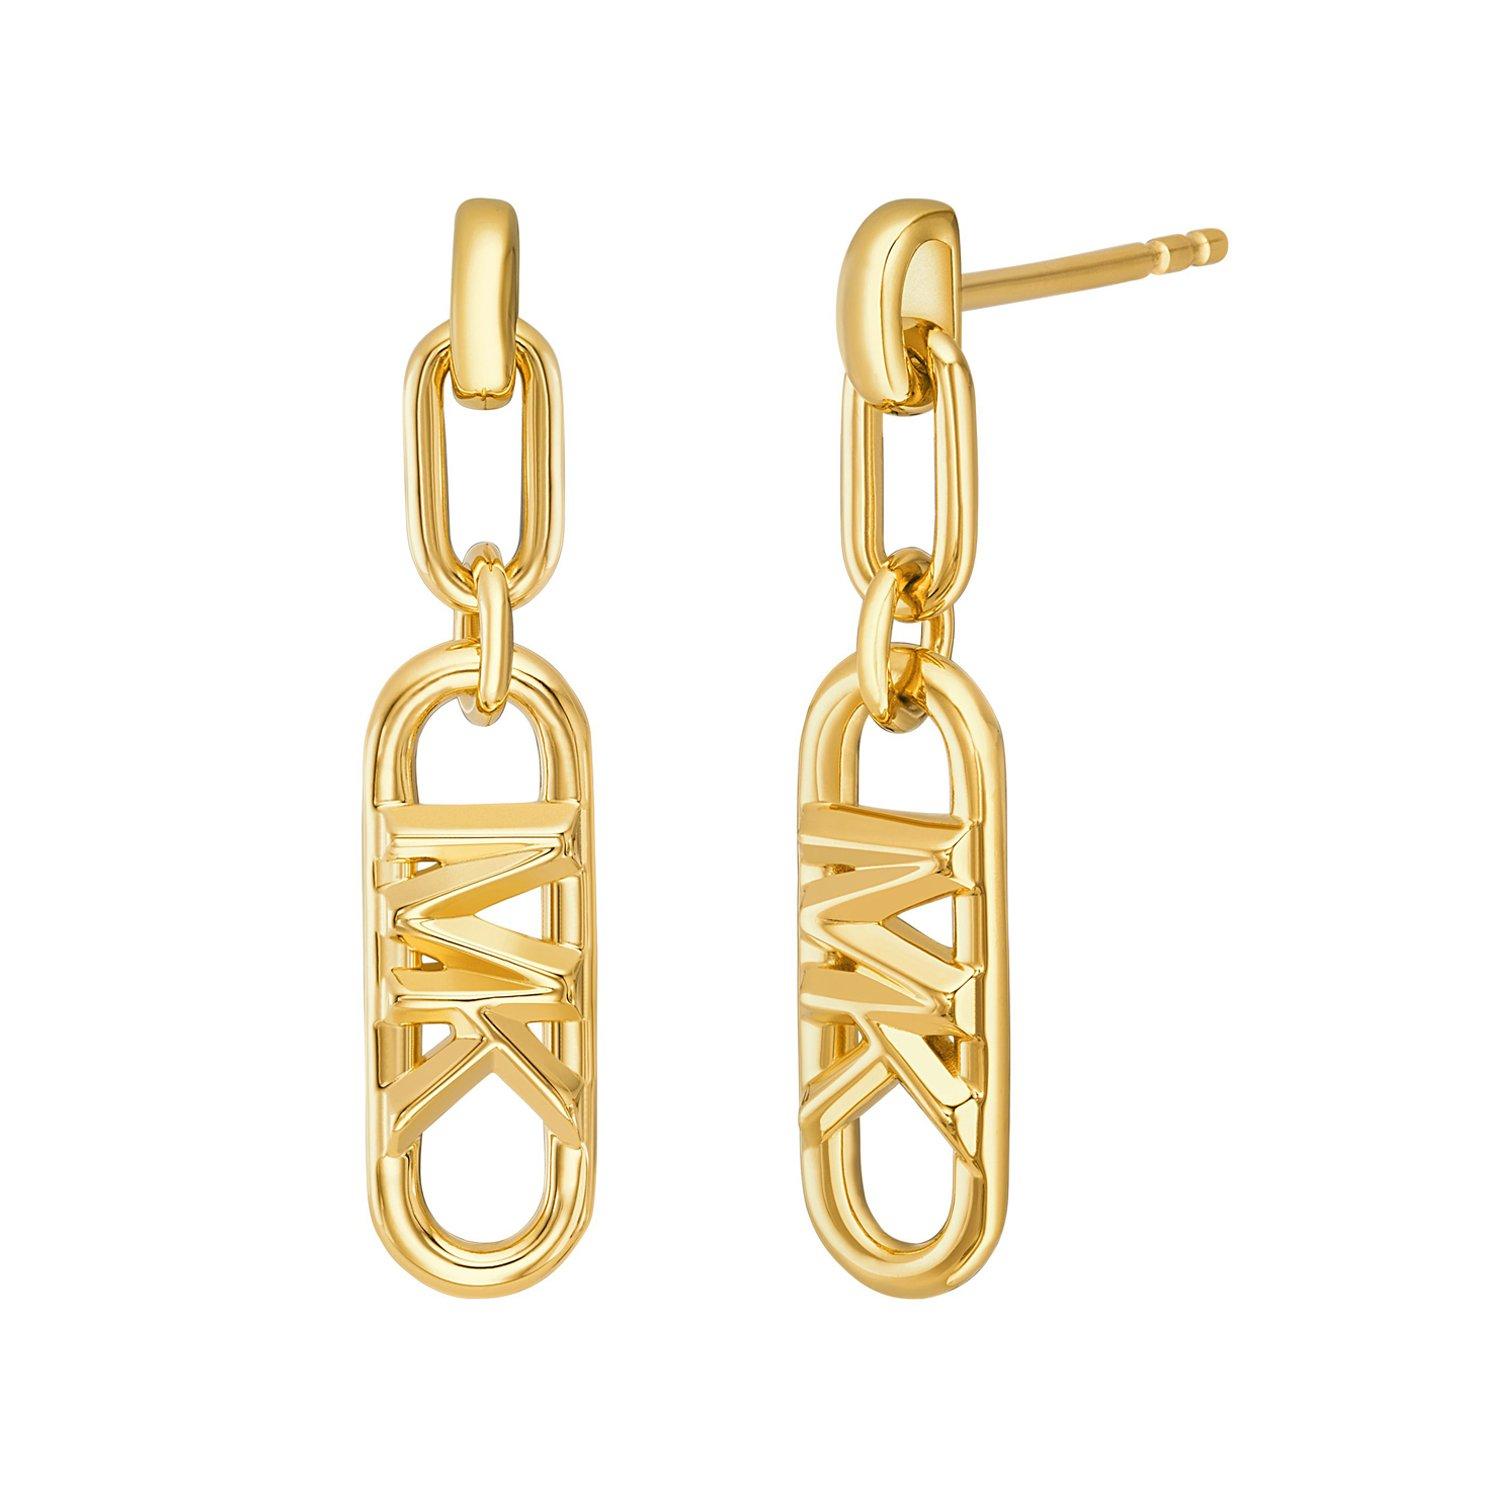 Michael Kors Jewellery | Earrings, Necklaces & More | Beaverbrooks